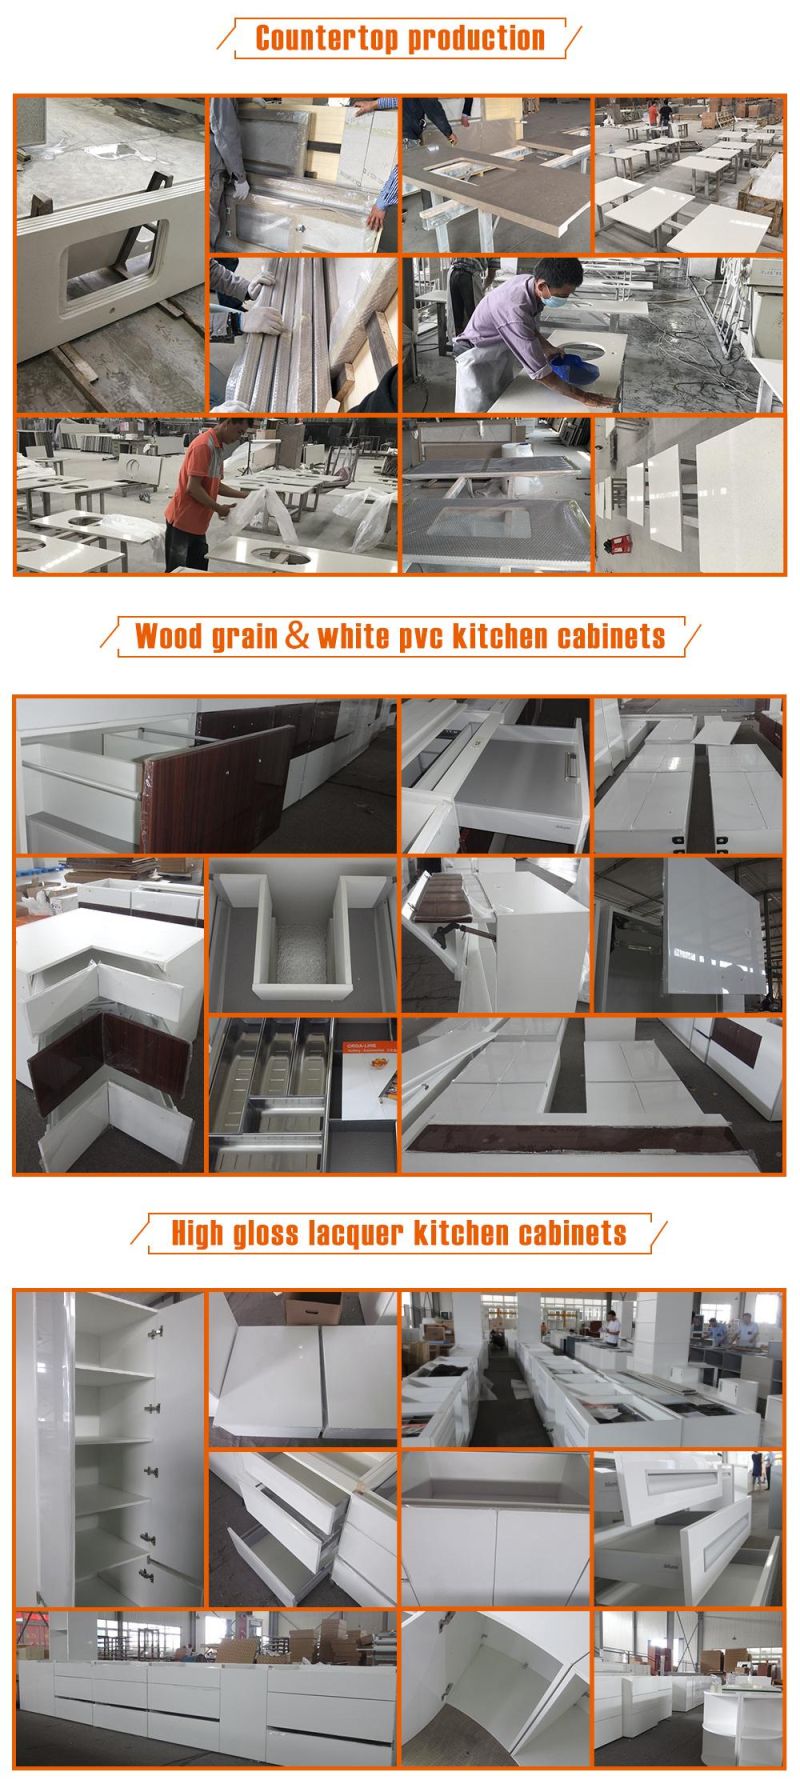 Modern Style White Design PVC Kitchen Cabinets Furniture Sets